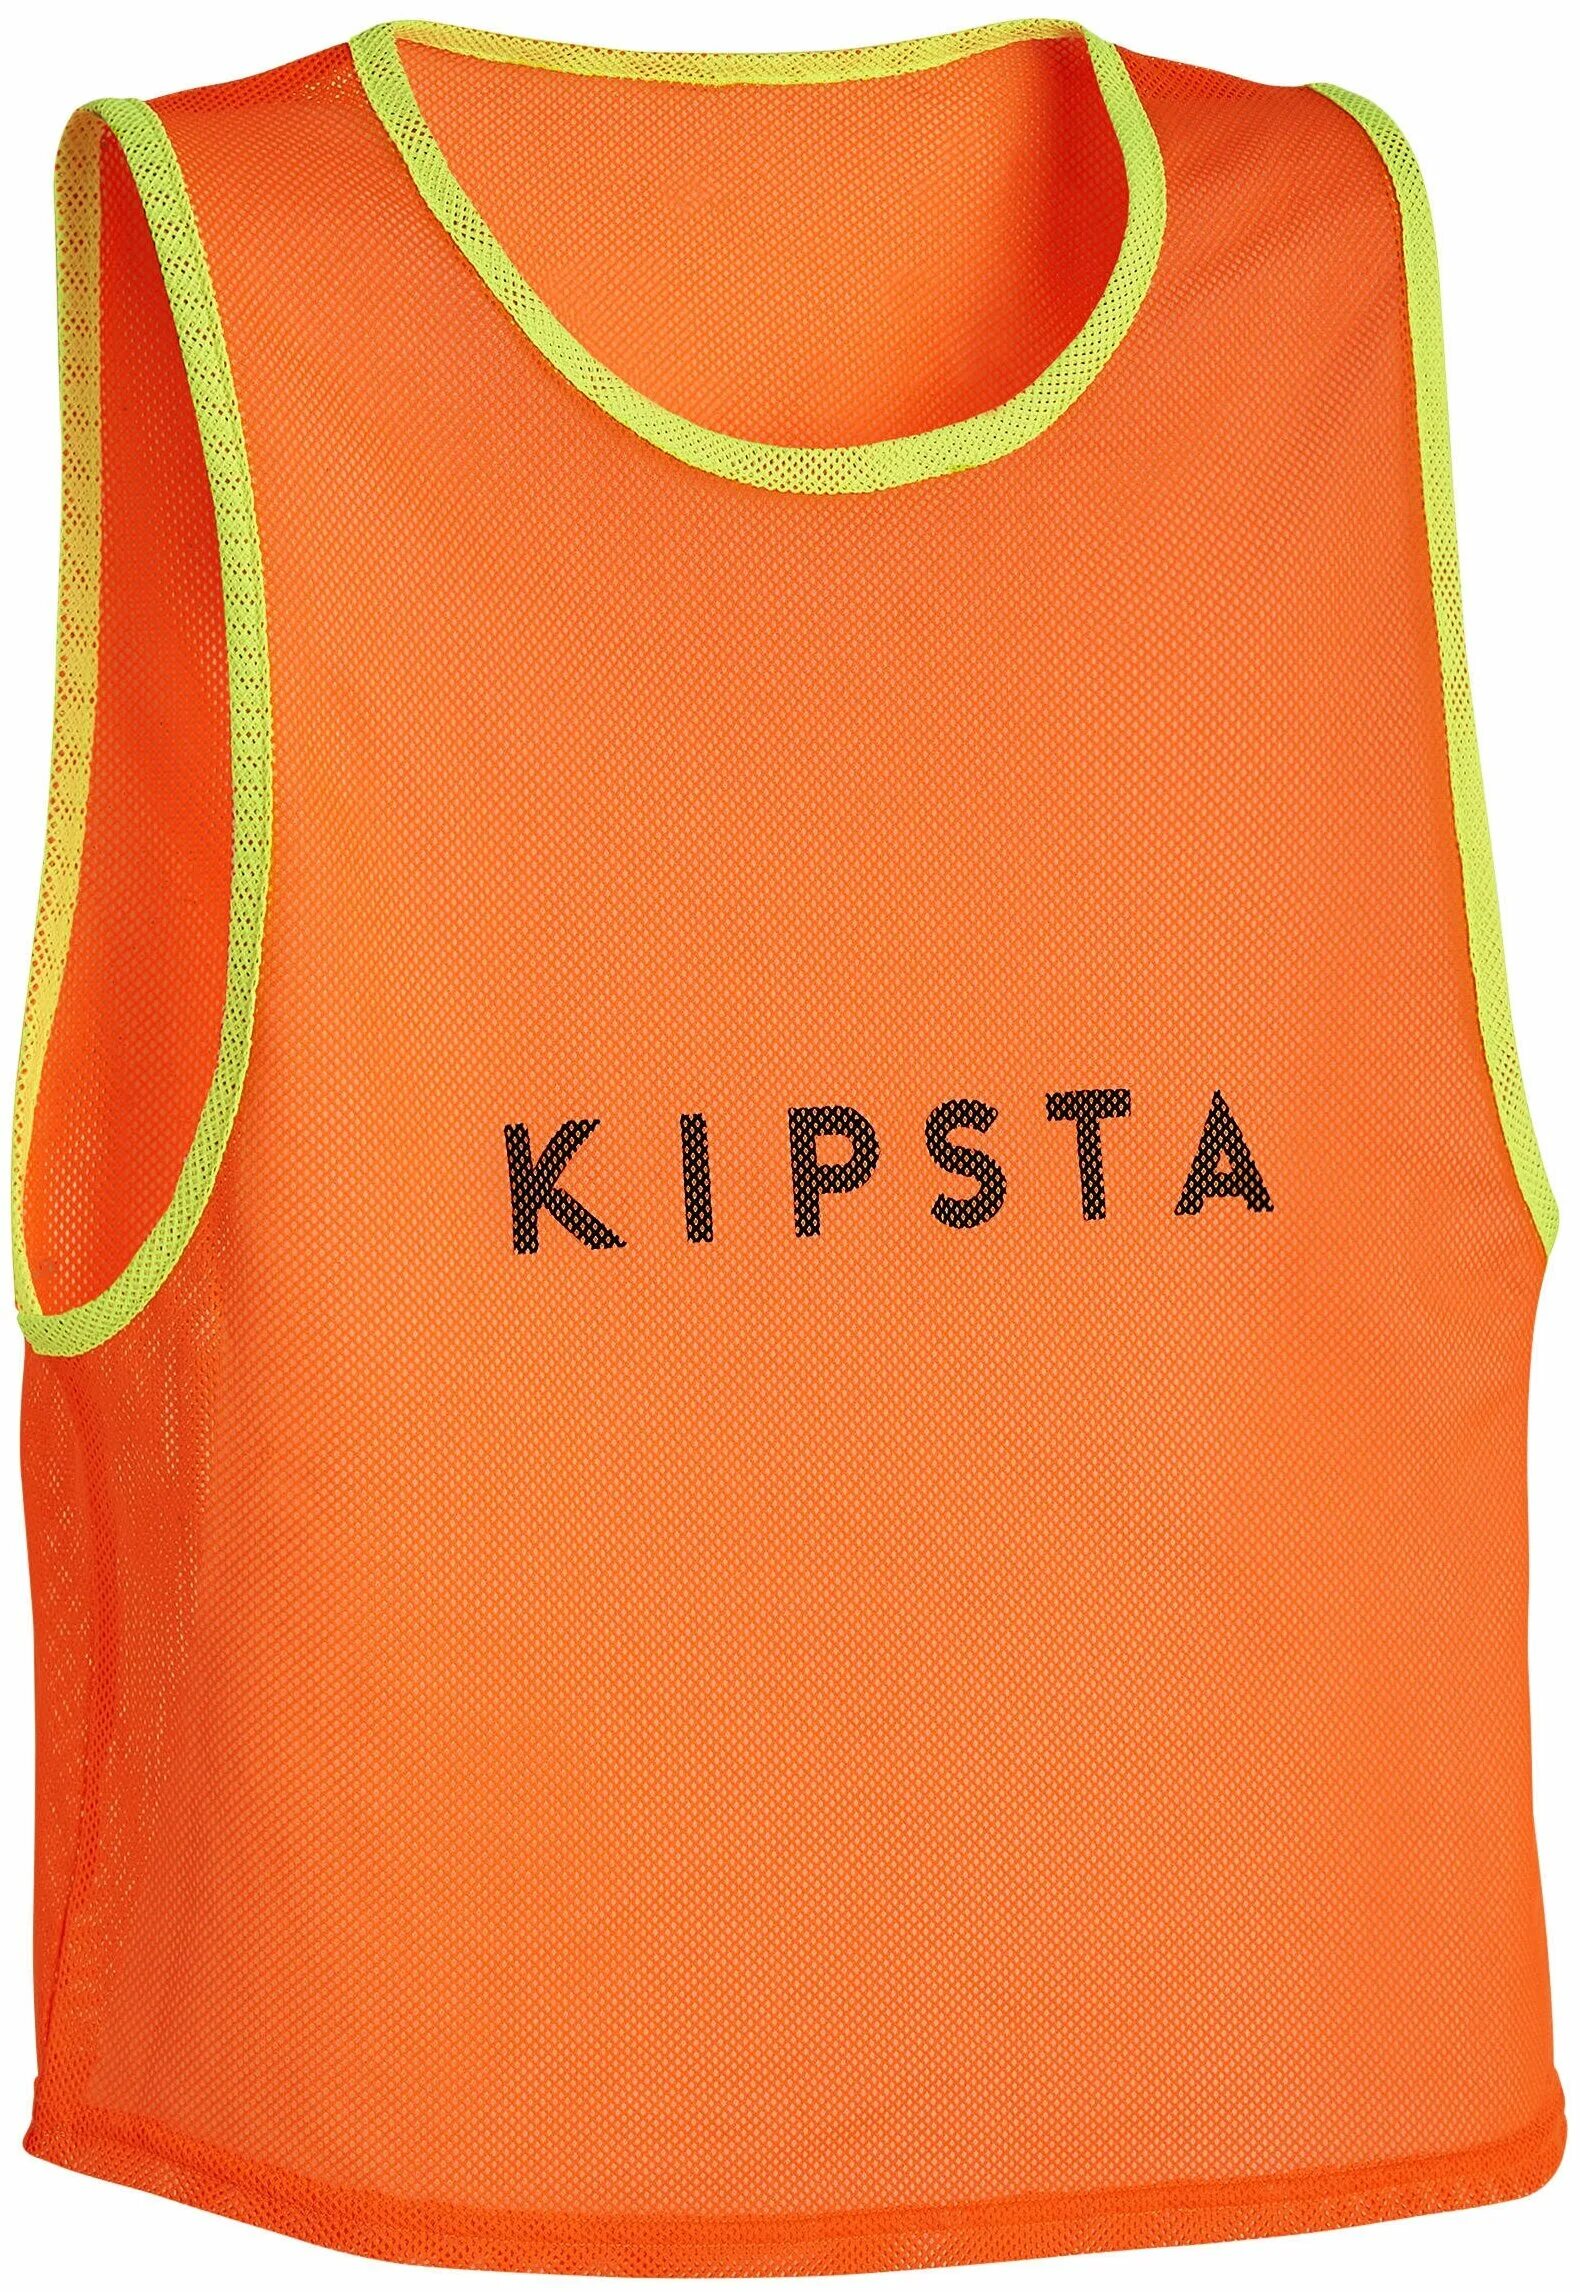 Манишка KIPSTA. Манишка спортивная KIPSTA. Манишка детская KIPSTA. Манишки футбольные KIPSTA оранжевые.